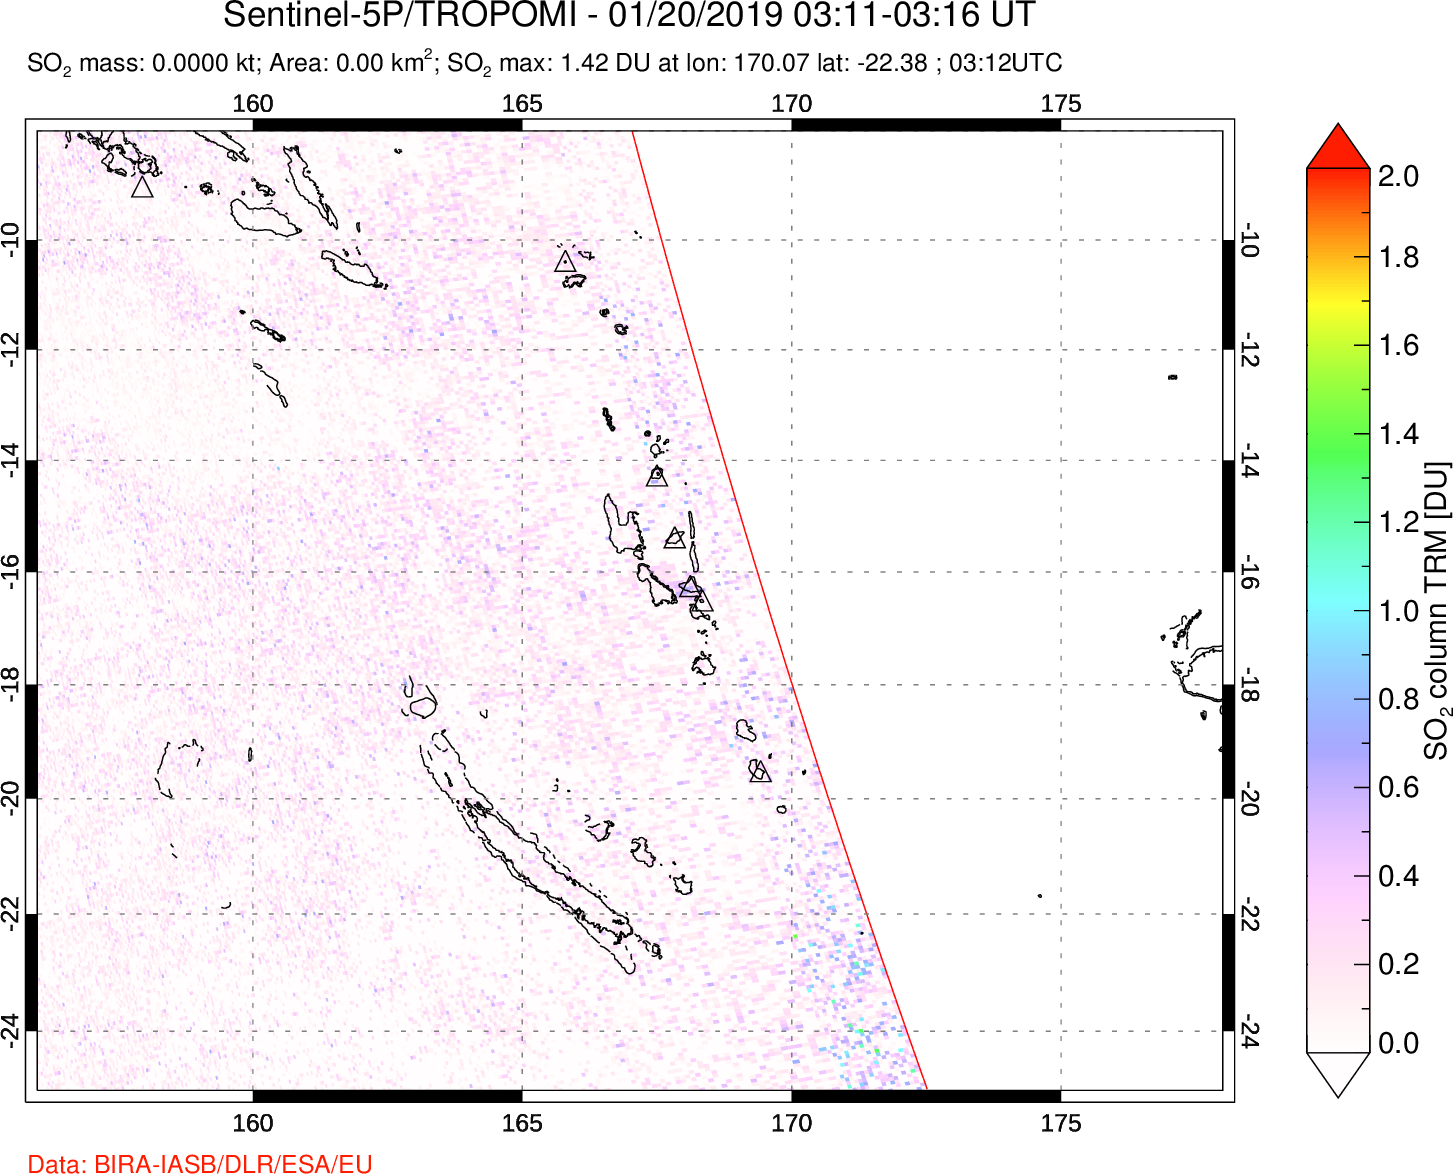 A sulfur dioxide image over Vanuatu, South Pacific on Jan 20, 2019.